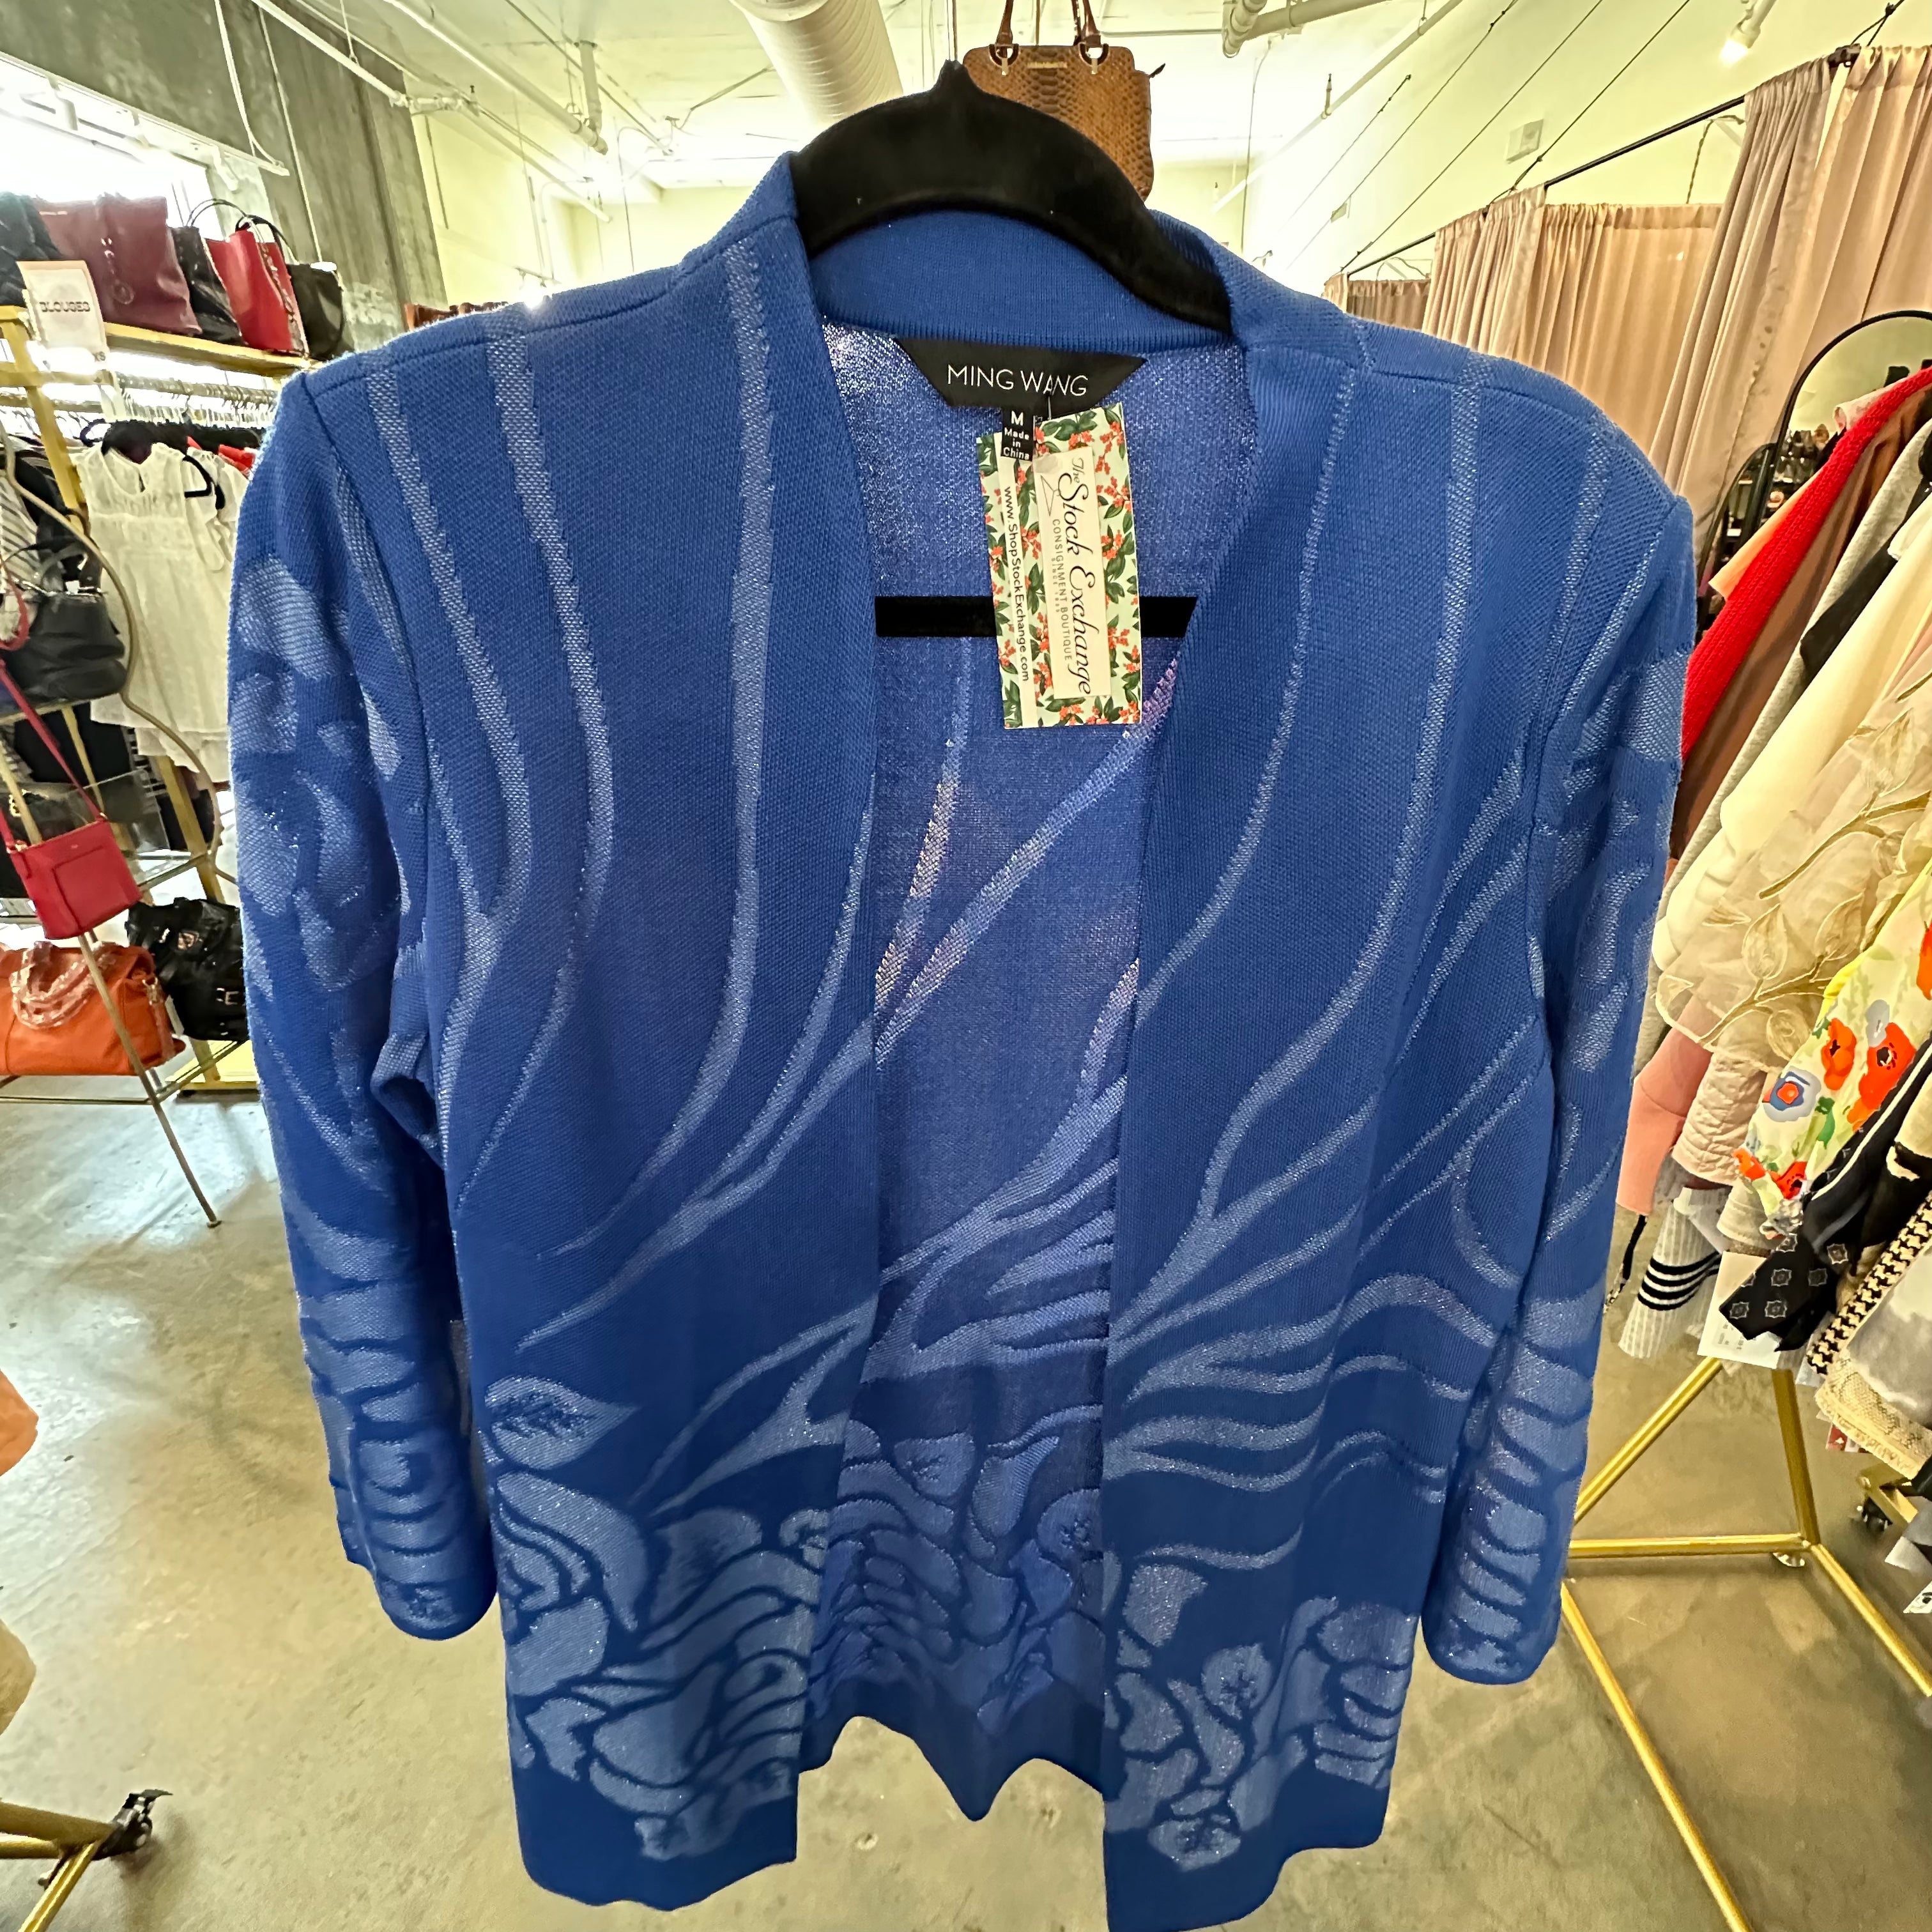 Ming Wang Blue Cardigan Size M